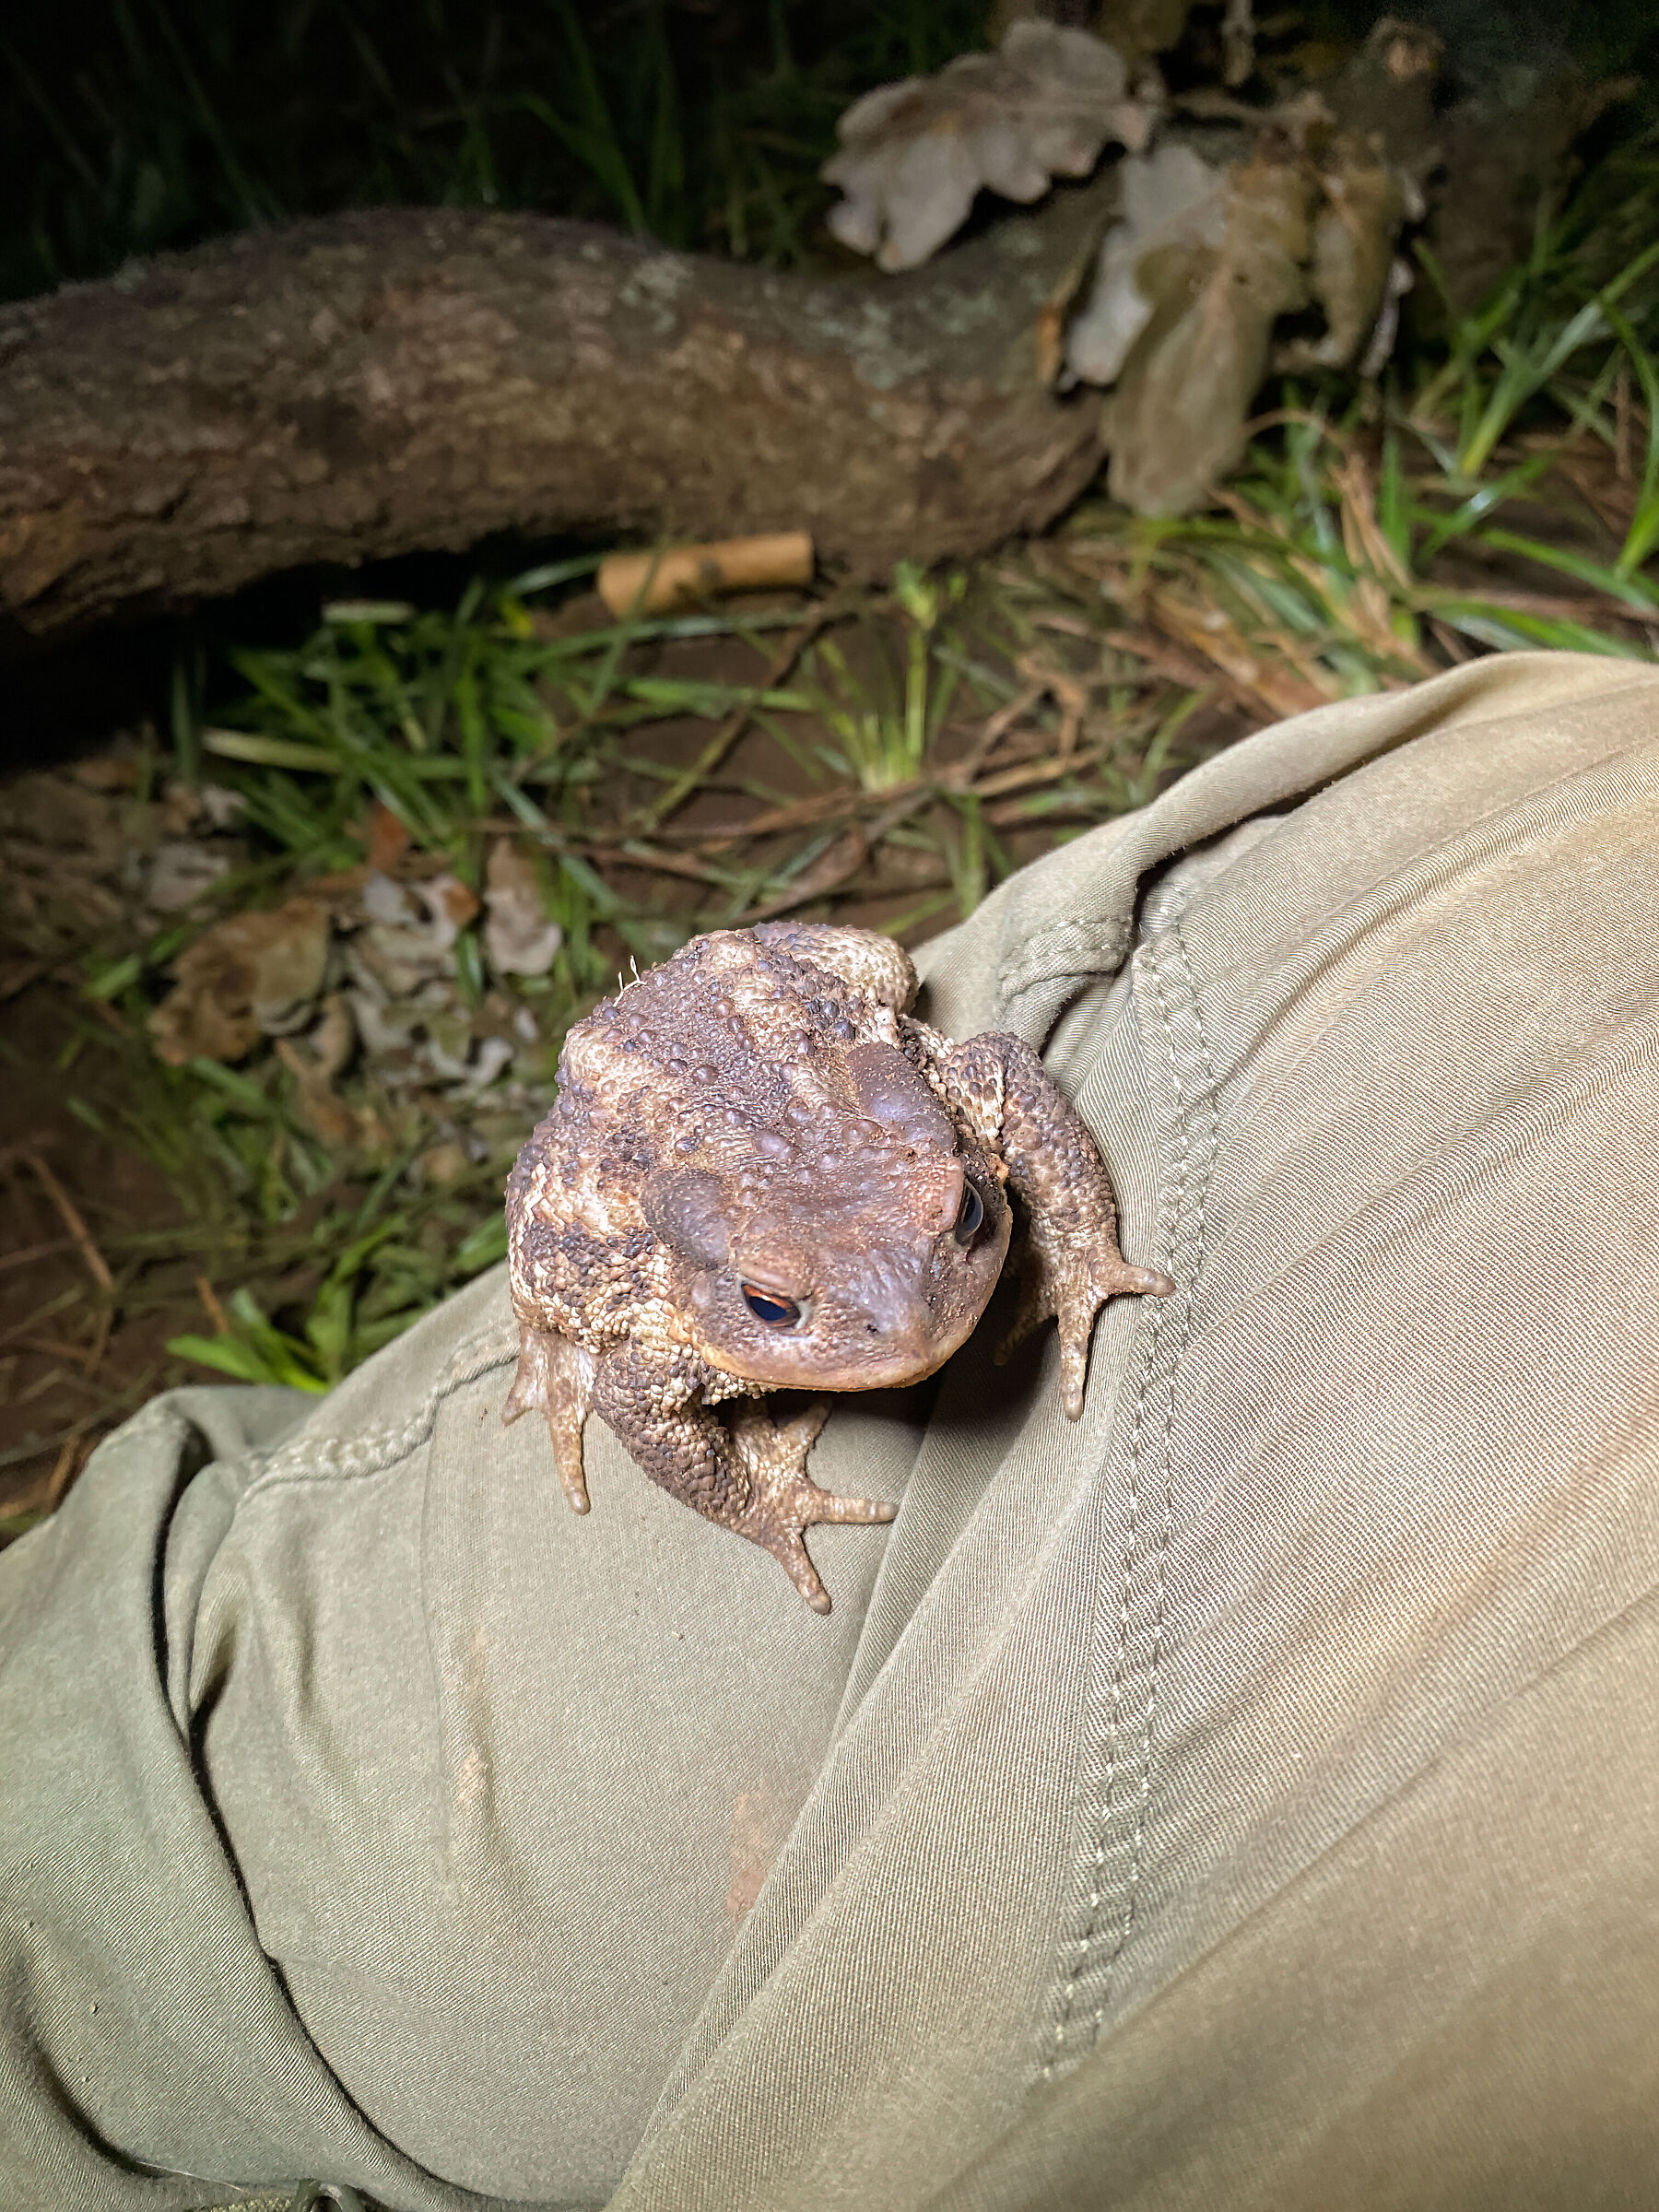 The confidant toad...